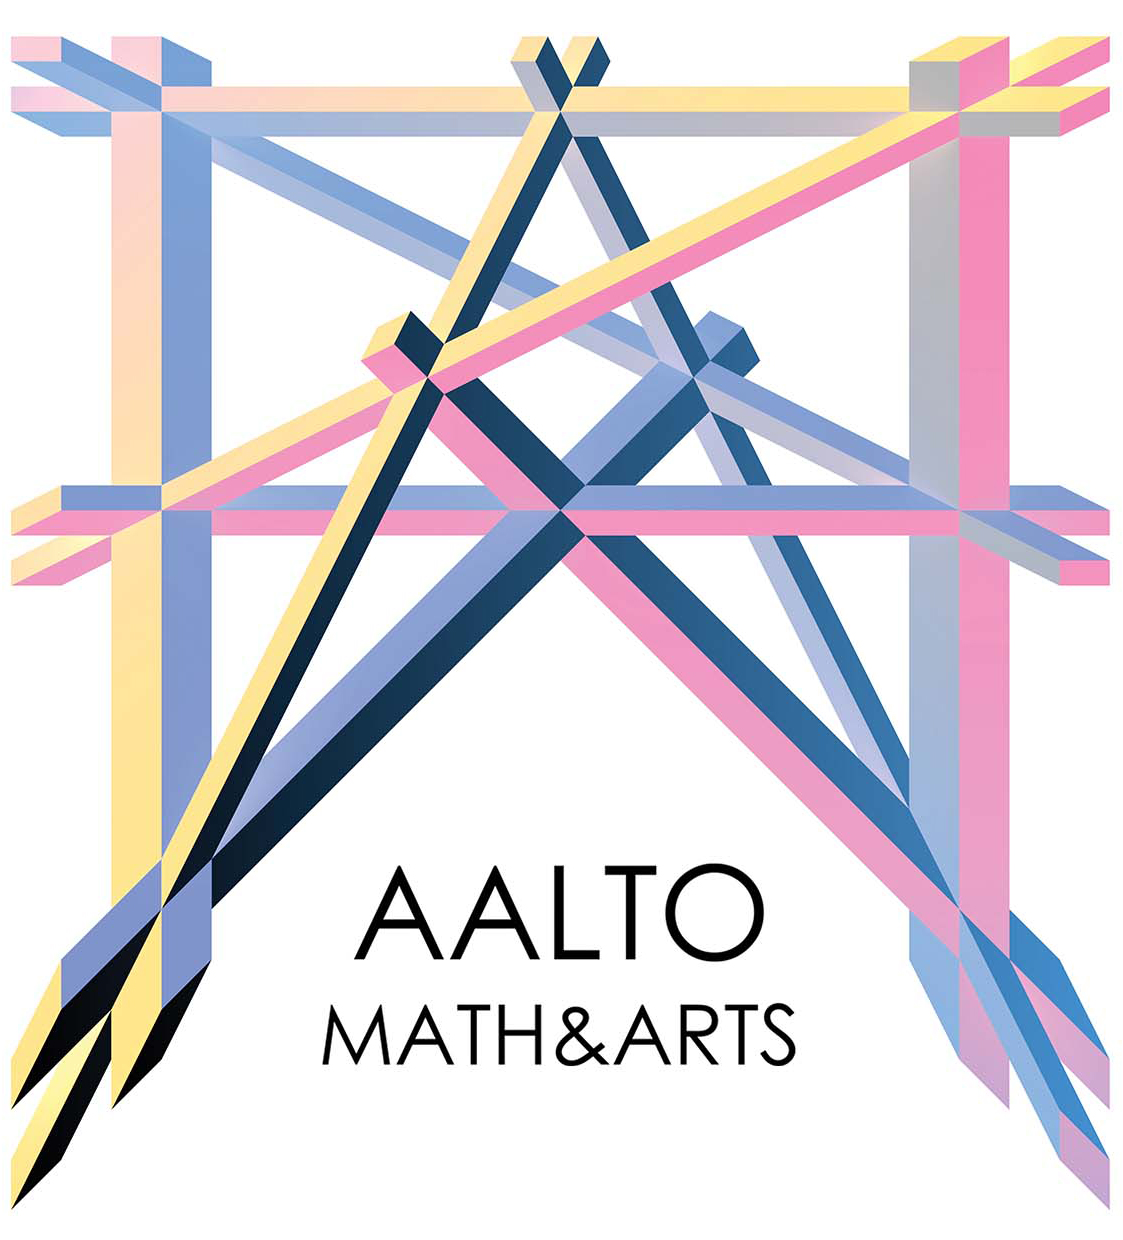 Aalto Math&Arts Logo